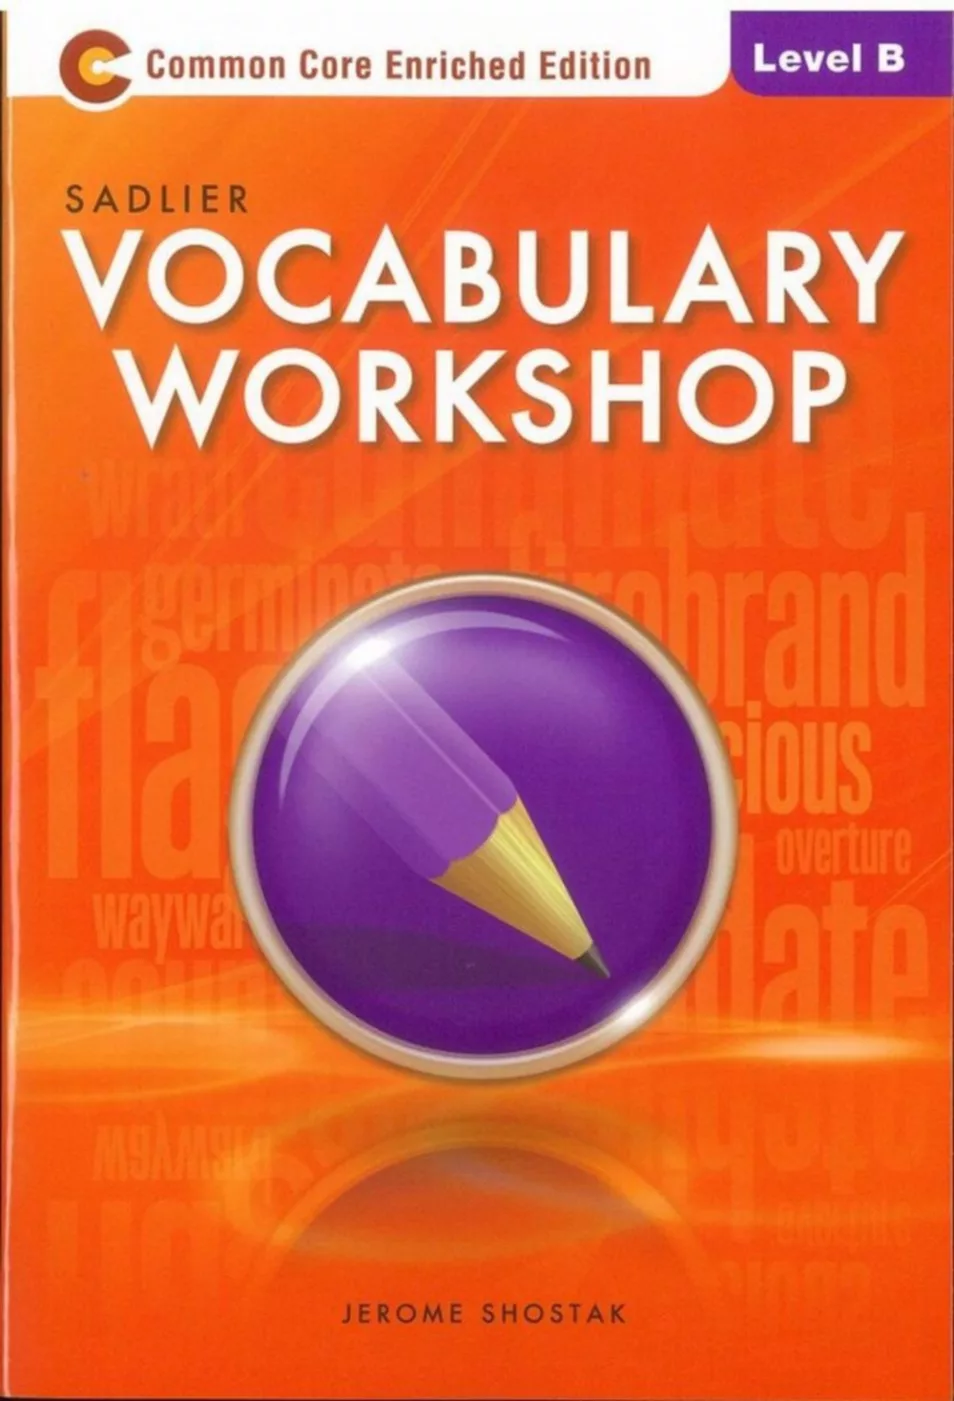 Sadlier Vocabulary Workshop Level B (Common Core Enriched Edition )